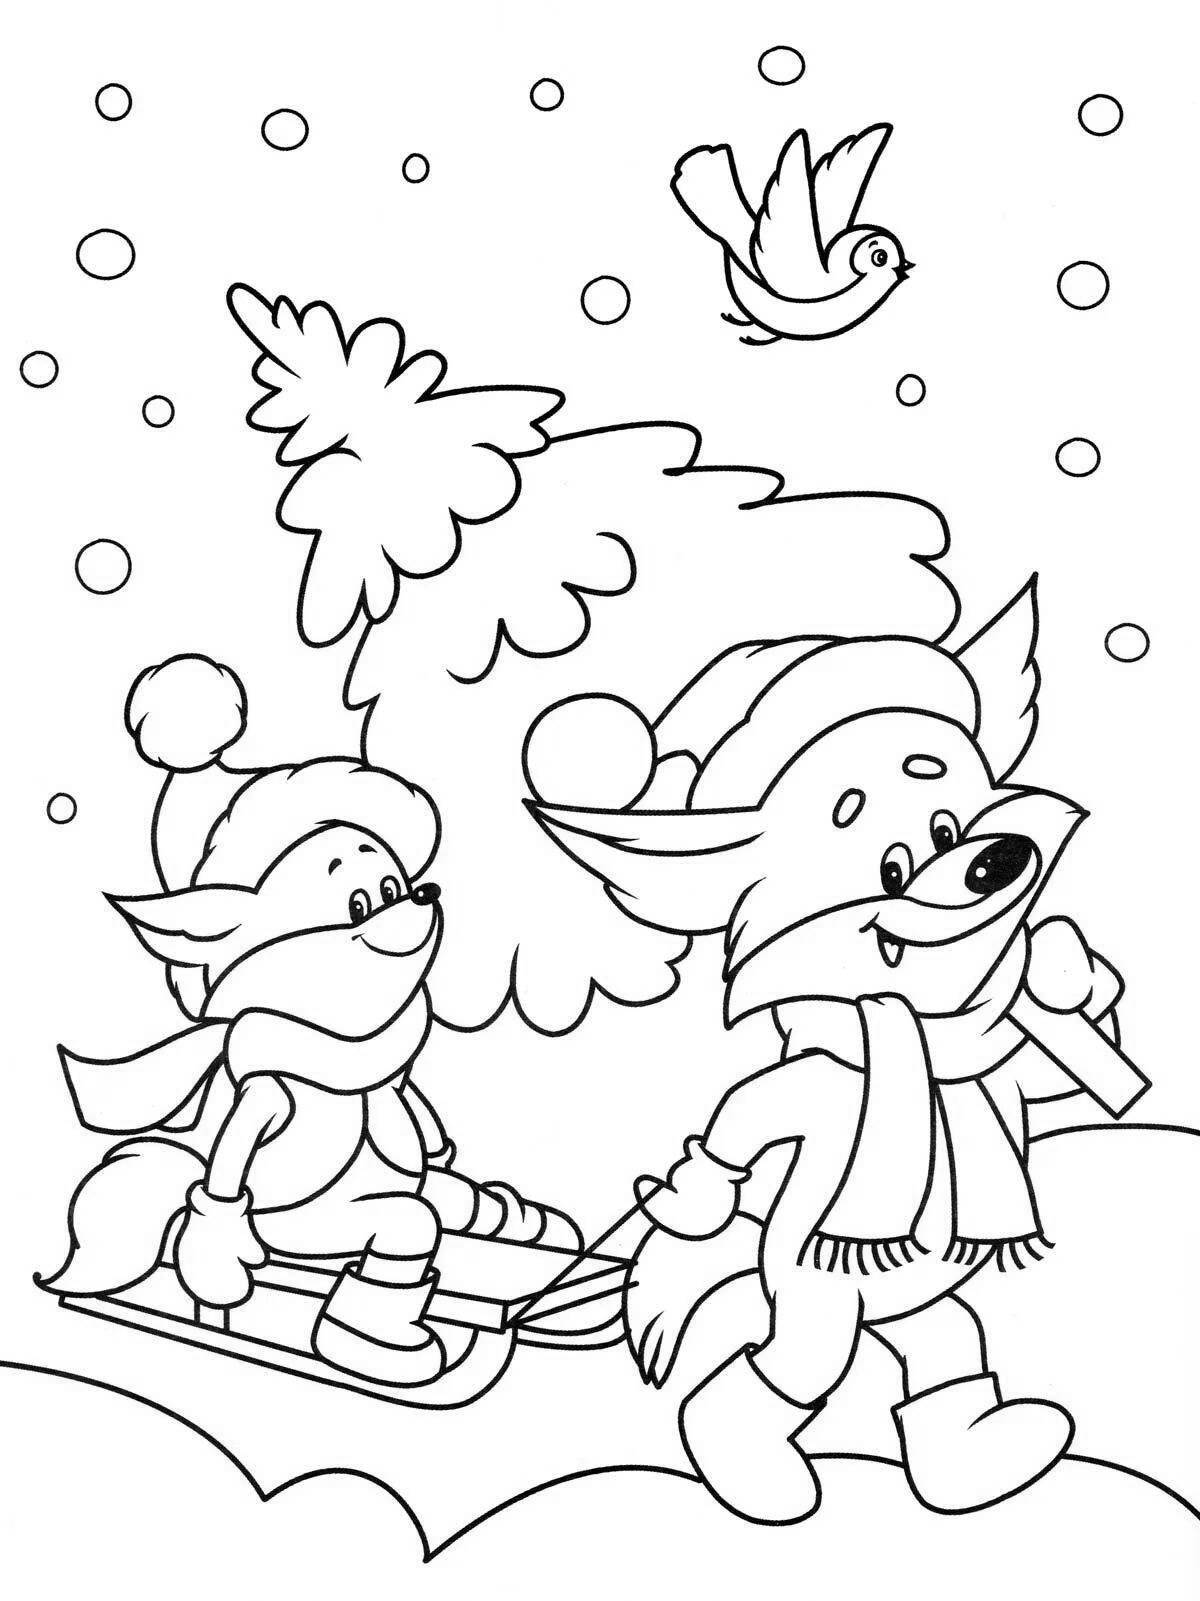 Adorable winter coloring book for preschoolers